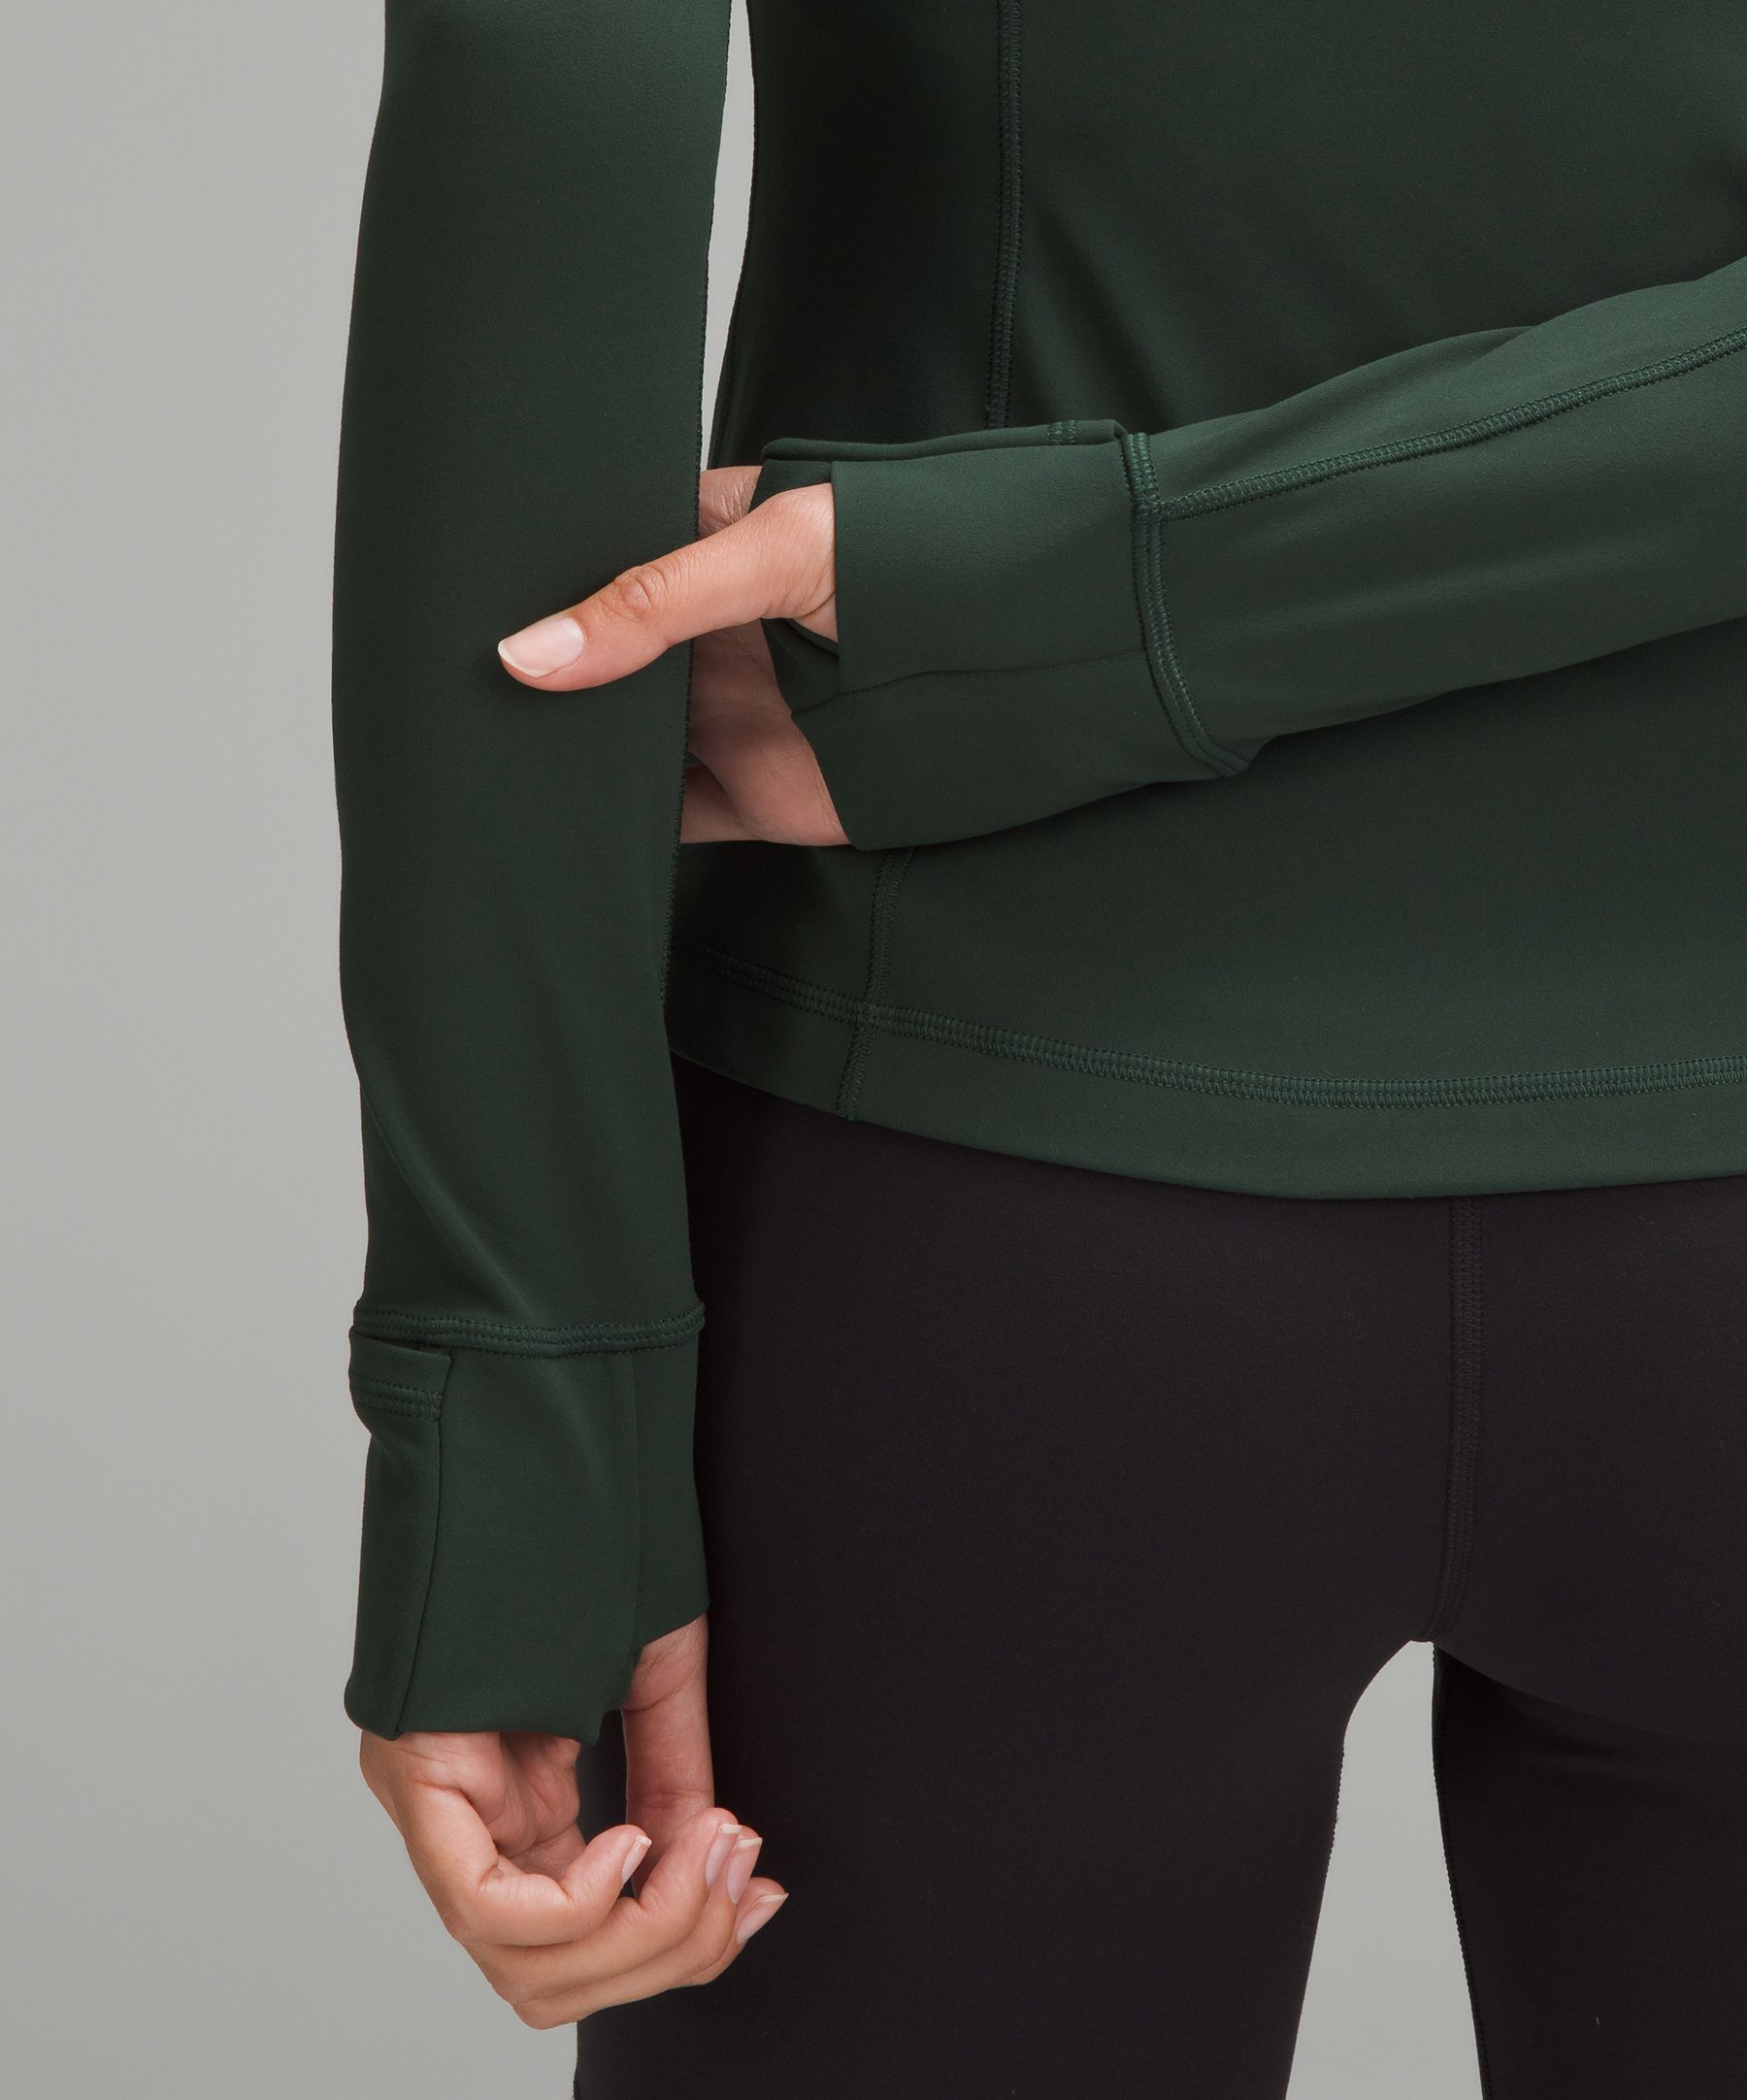 Define Jacket *Nulu | Women's Hoodies & Sweatshirts